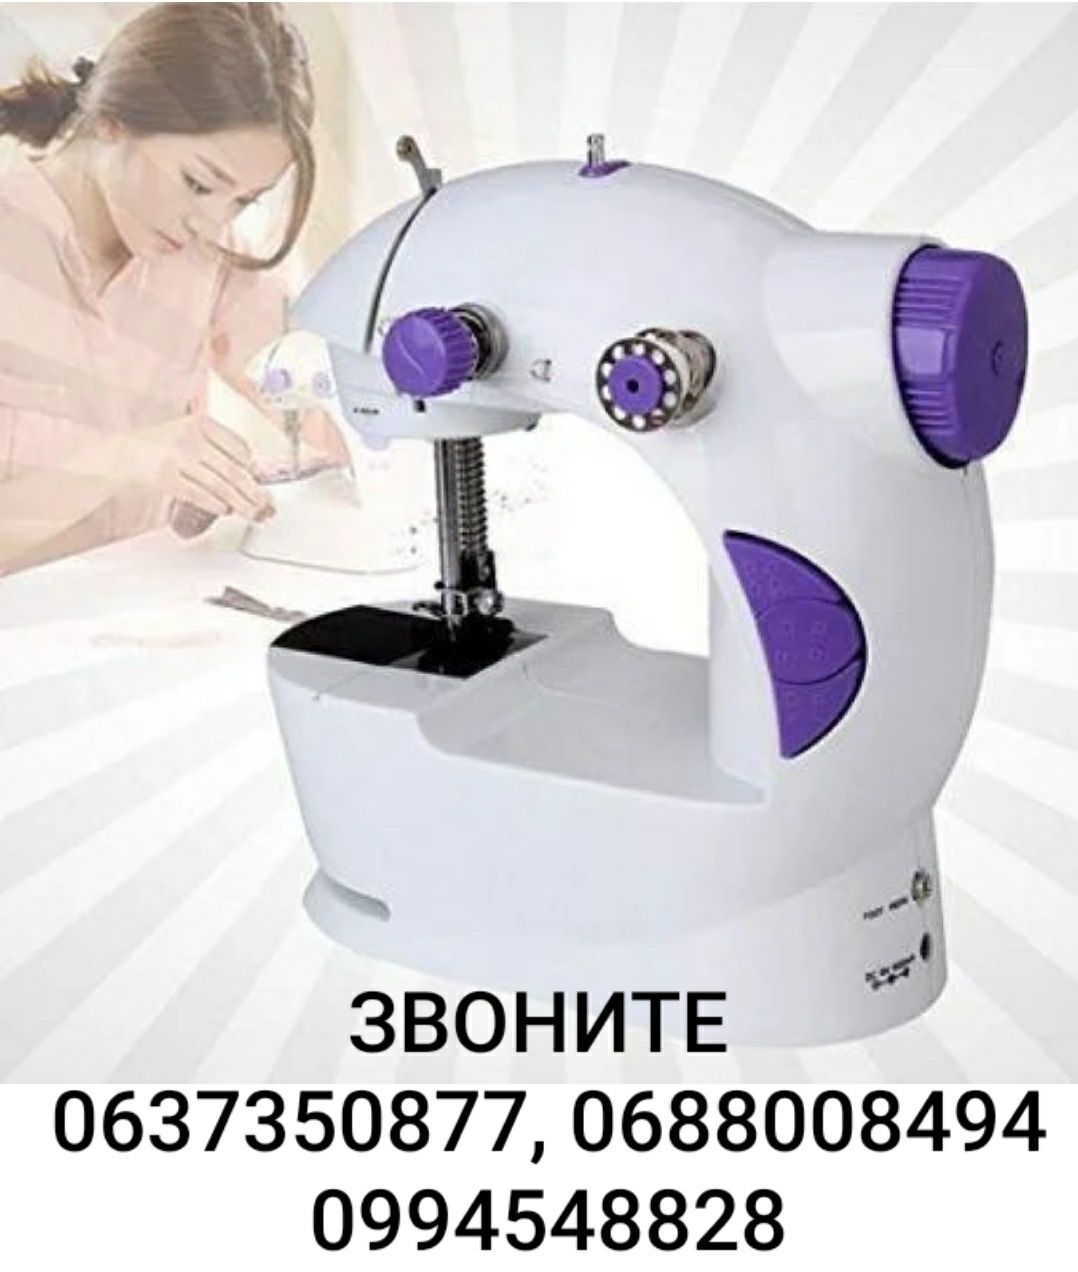 Швейная машинка портативная Mini Sewing Machine FHSM 201